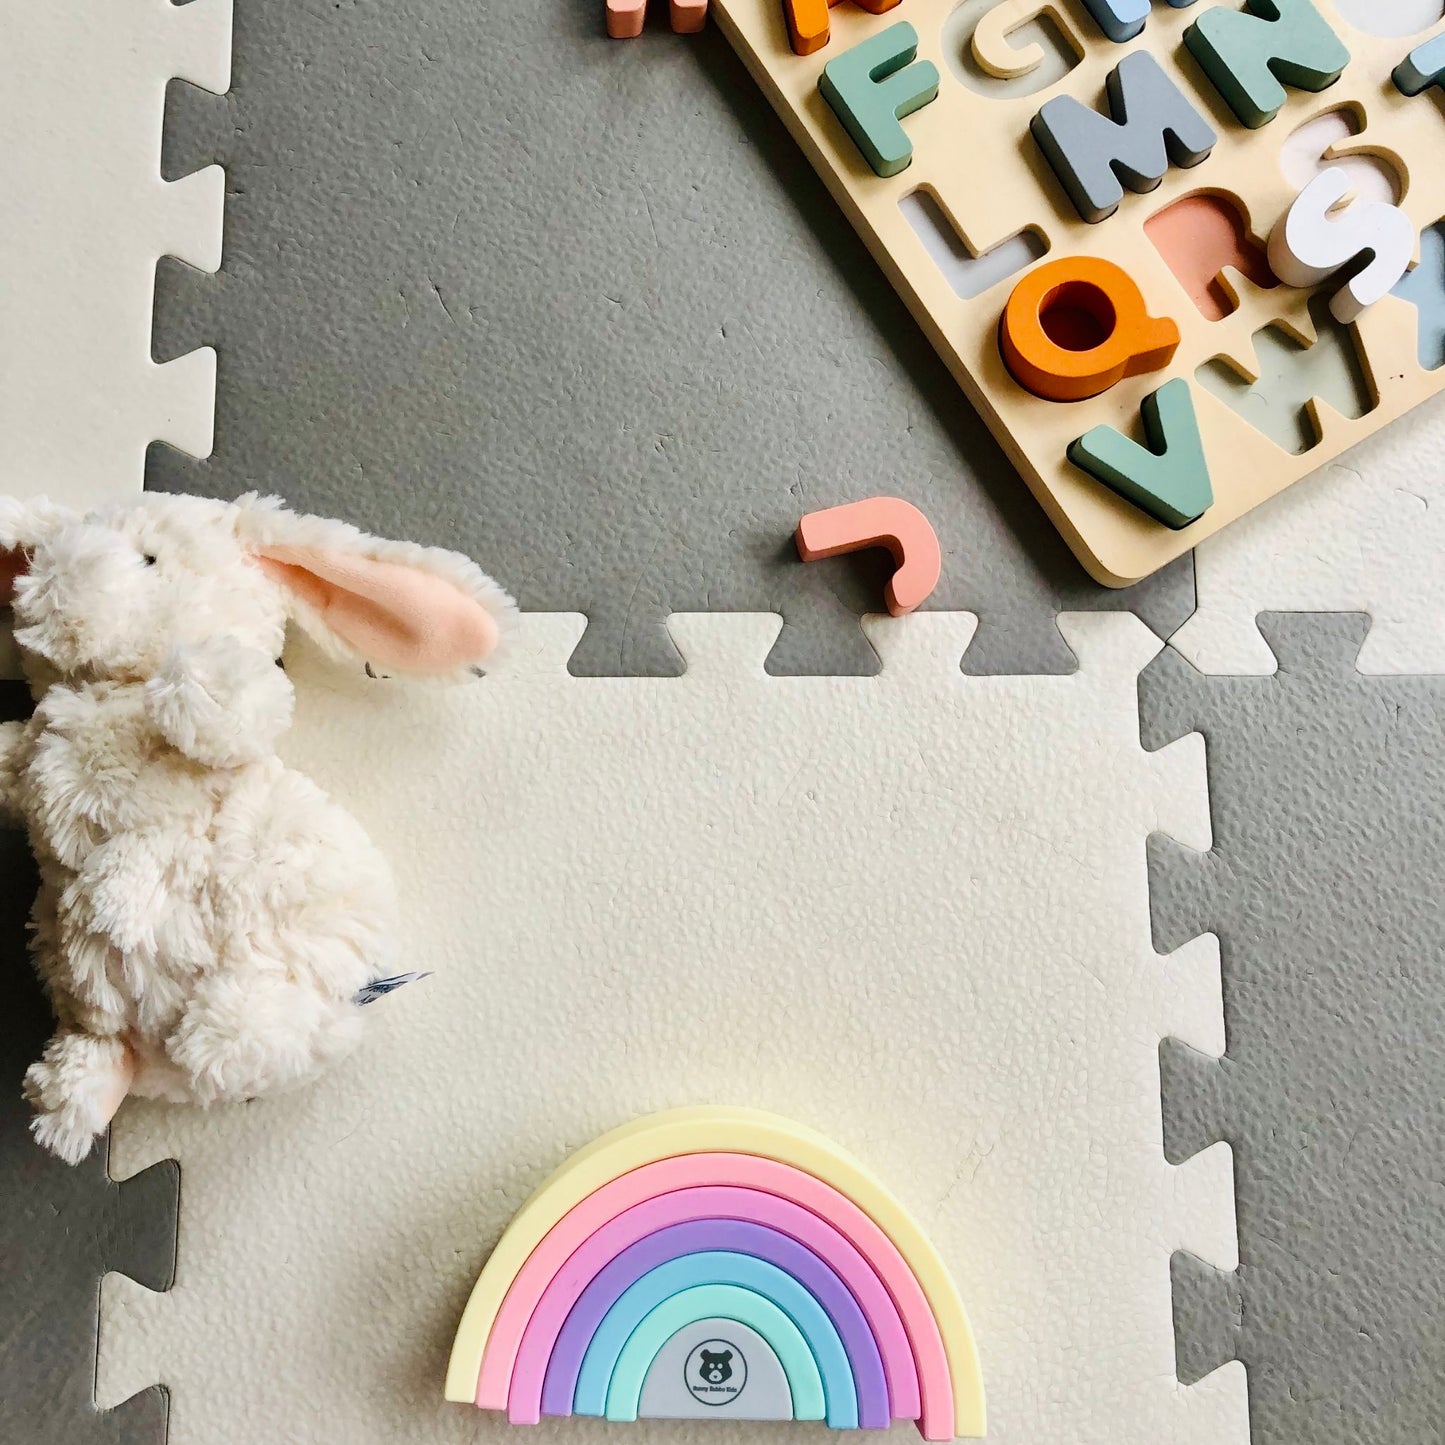 rainbow stacking toy laying in nursery floor - hunny bubba kids